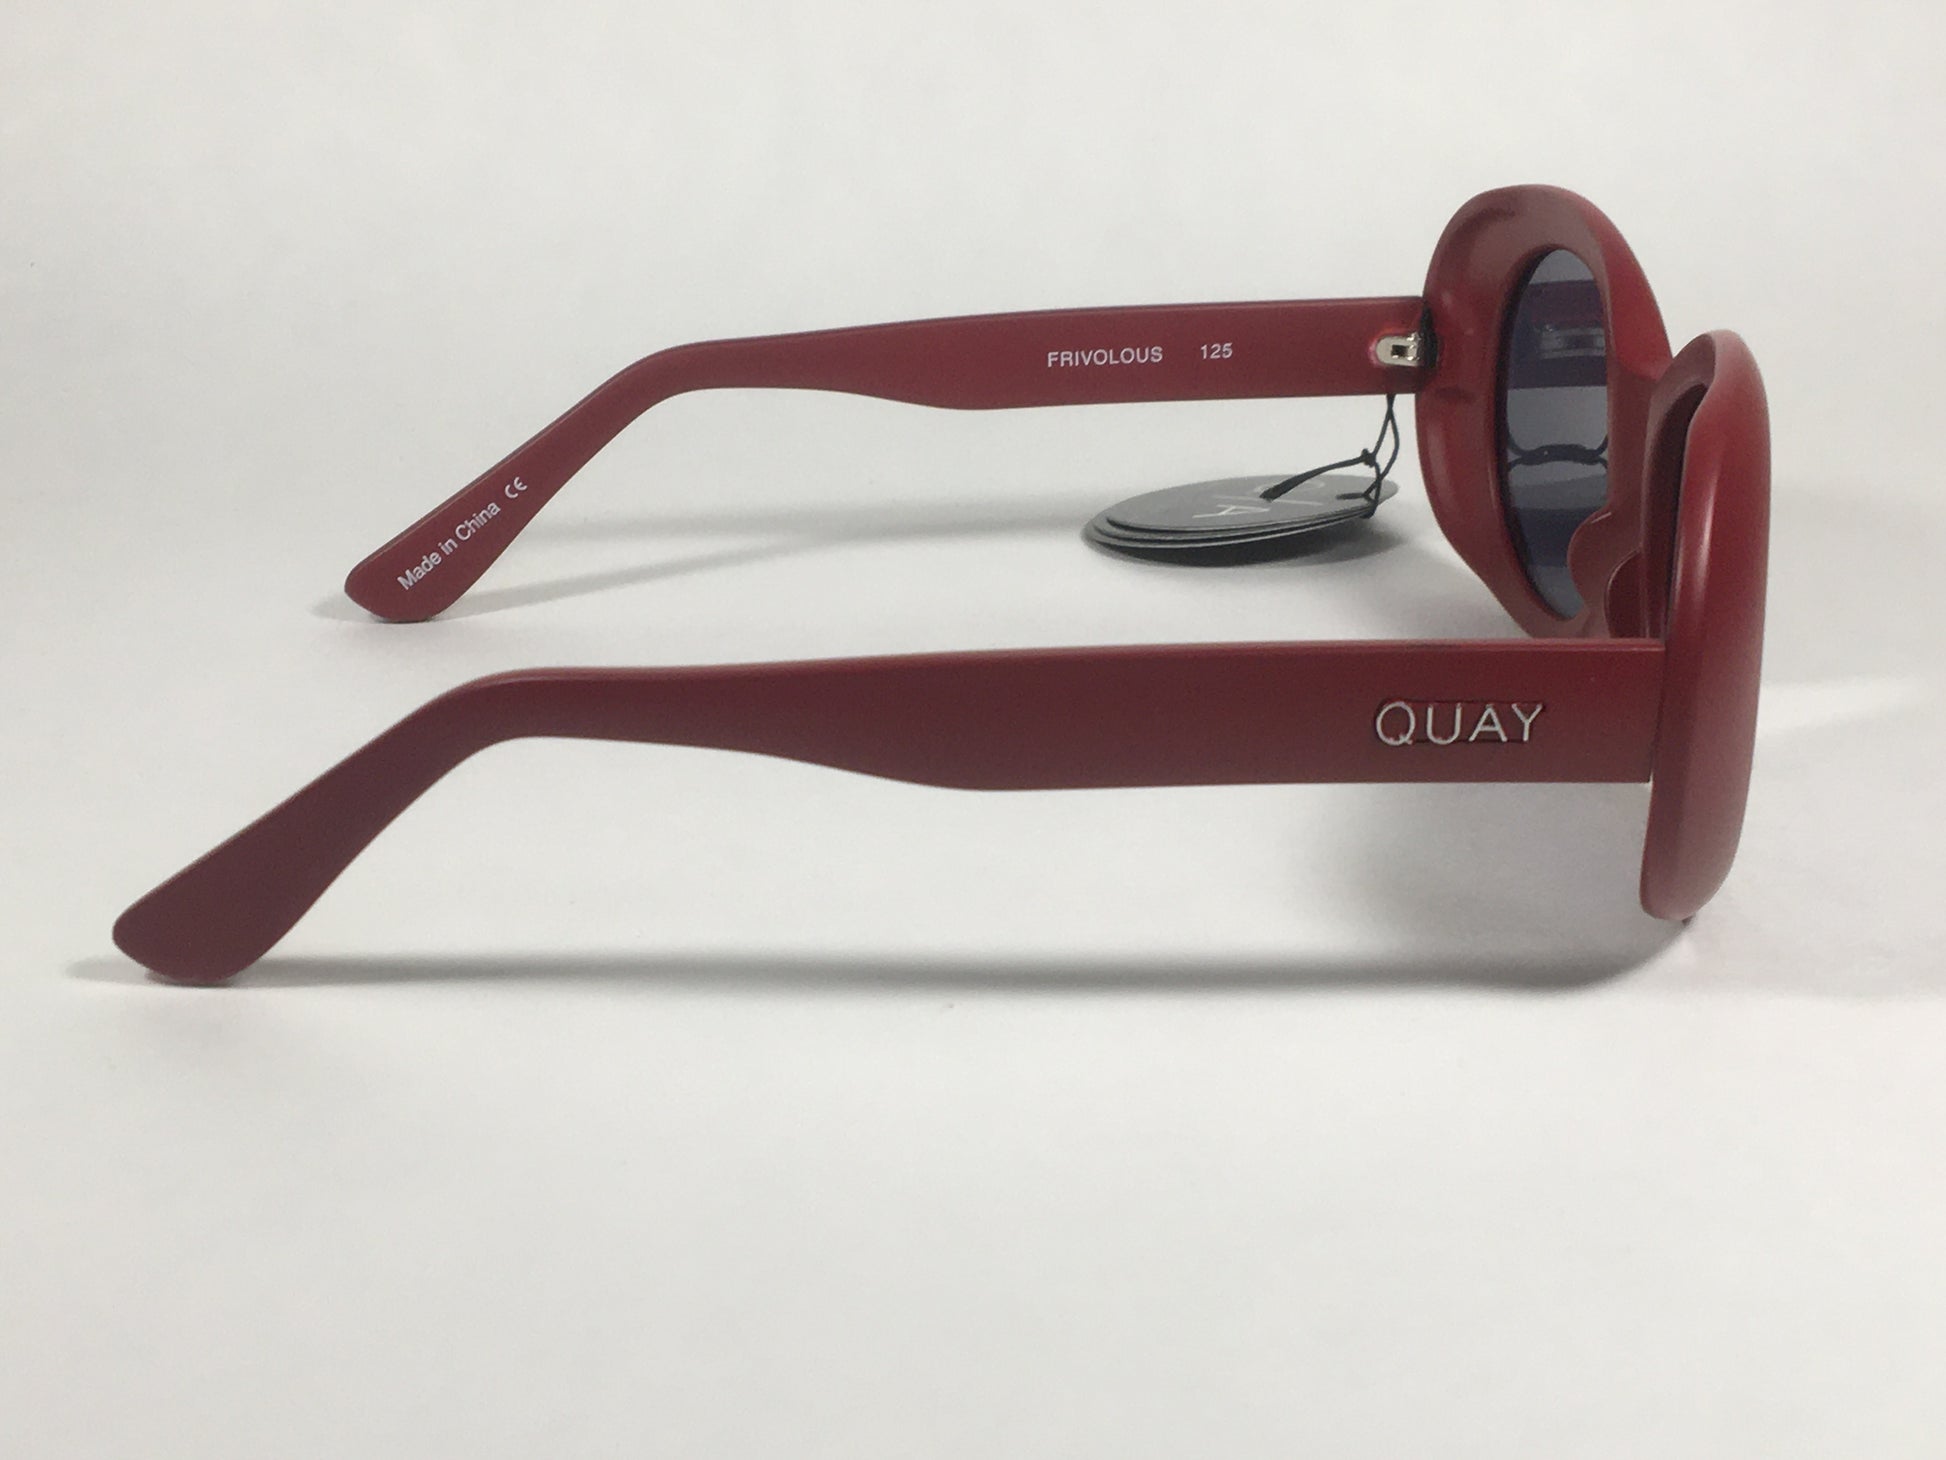 Quay Frivolous QW000293 RED/SMK Oval Sunglasses Matte Red Plastic Frame Smoke Gray Lens - Sunglasses